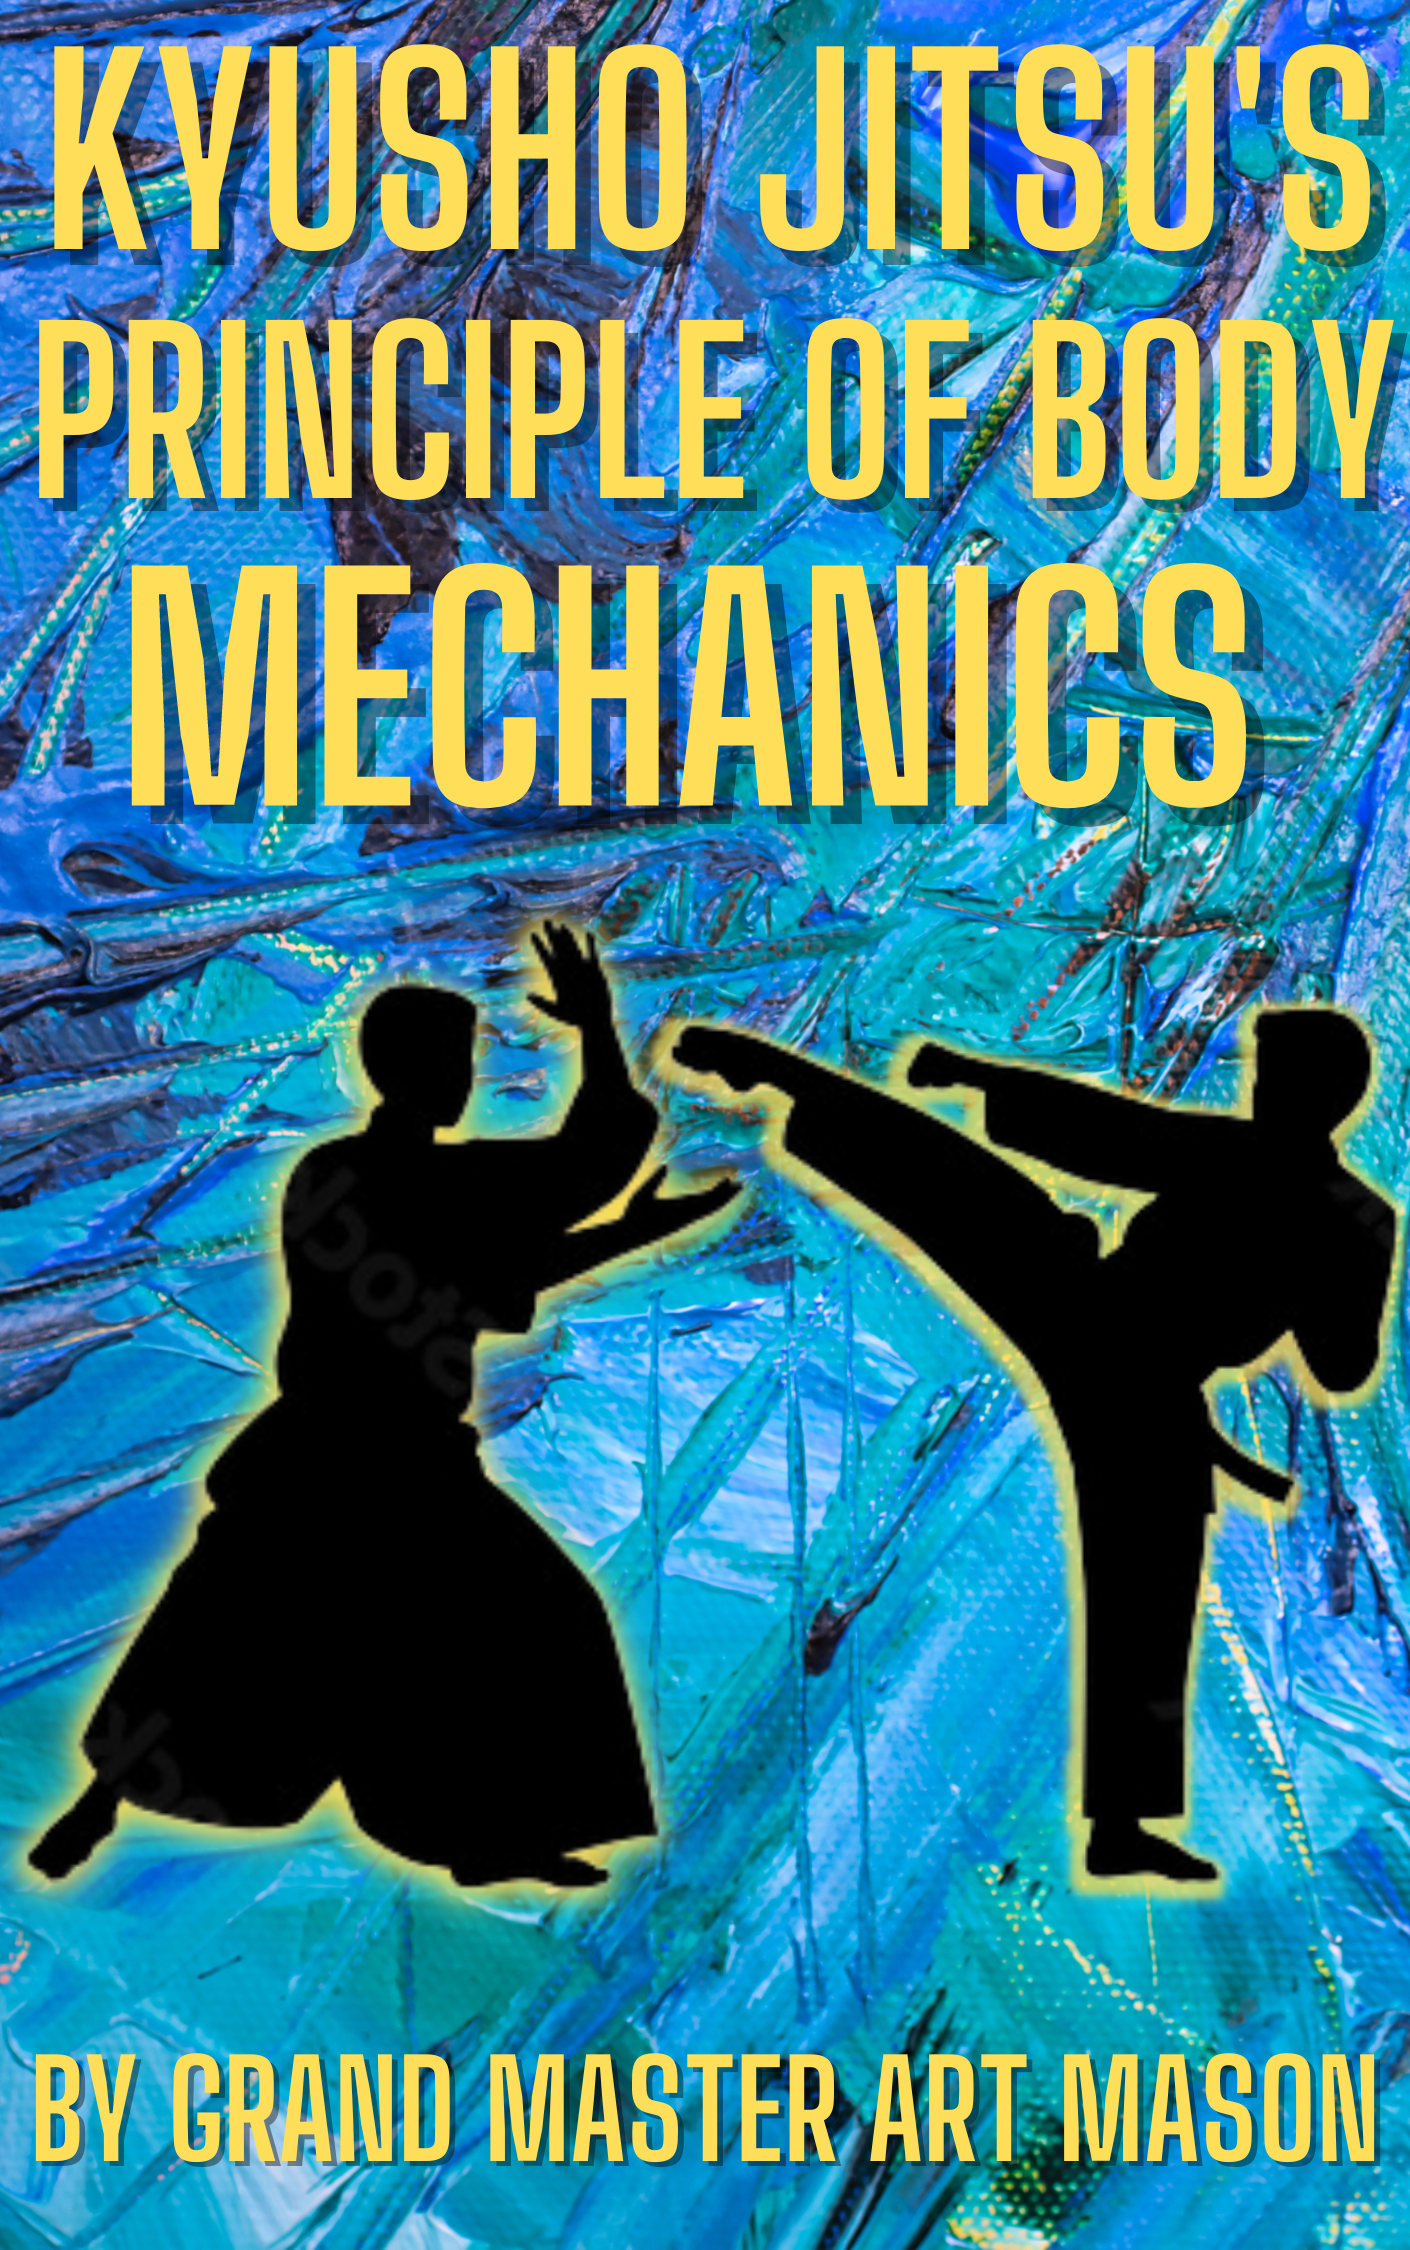 Principle of Body Mechanics